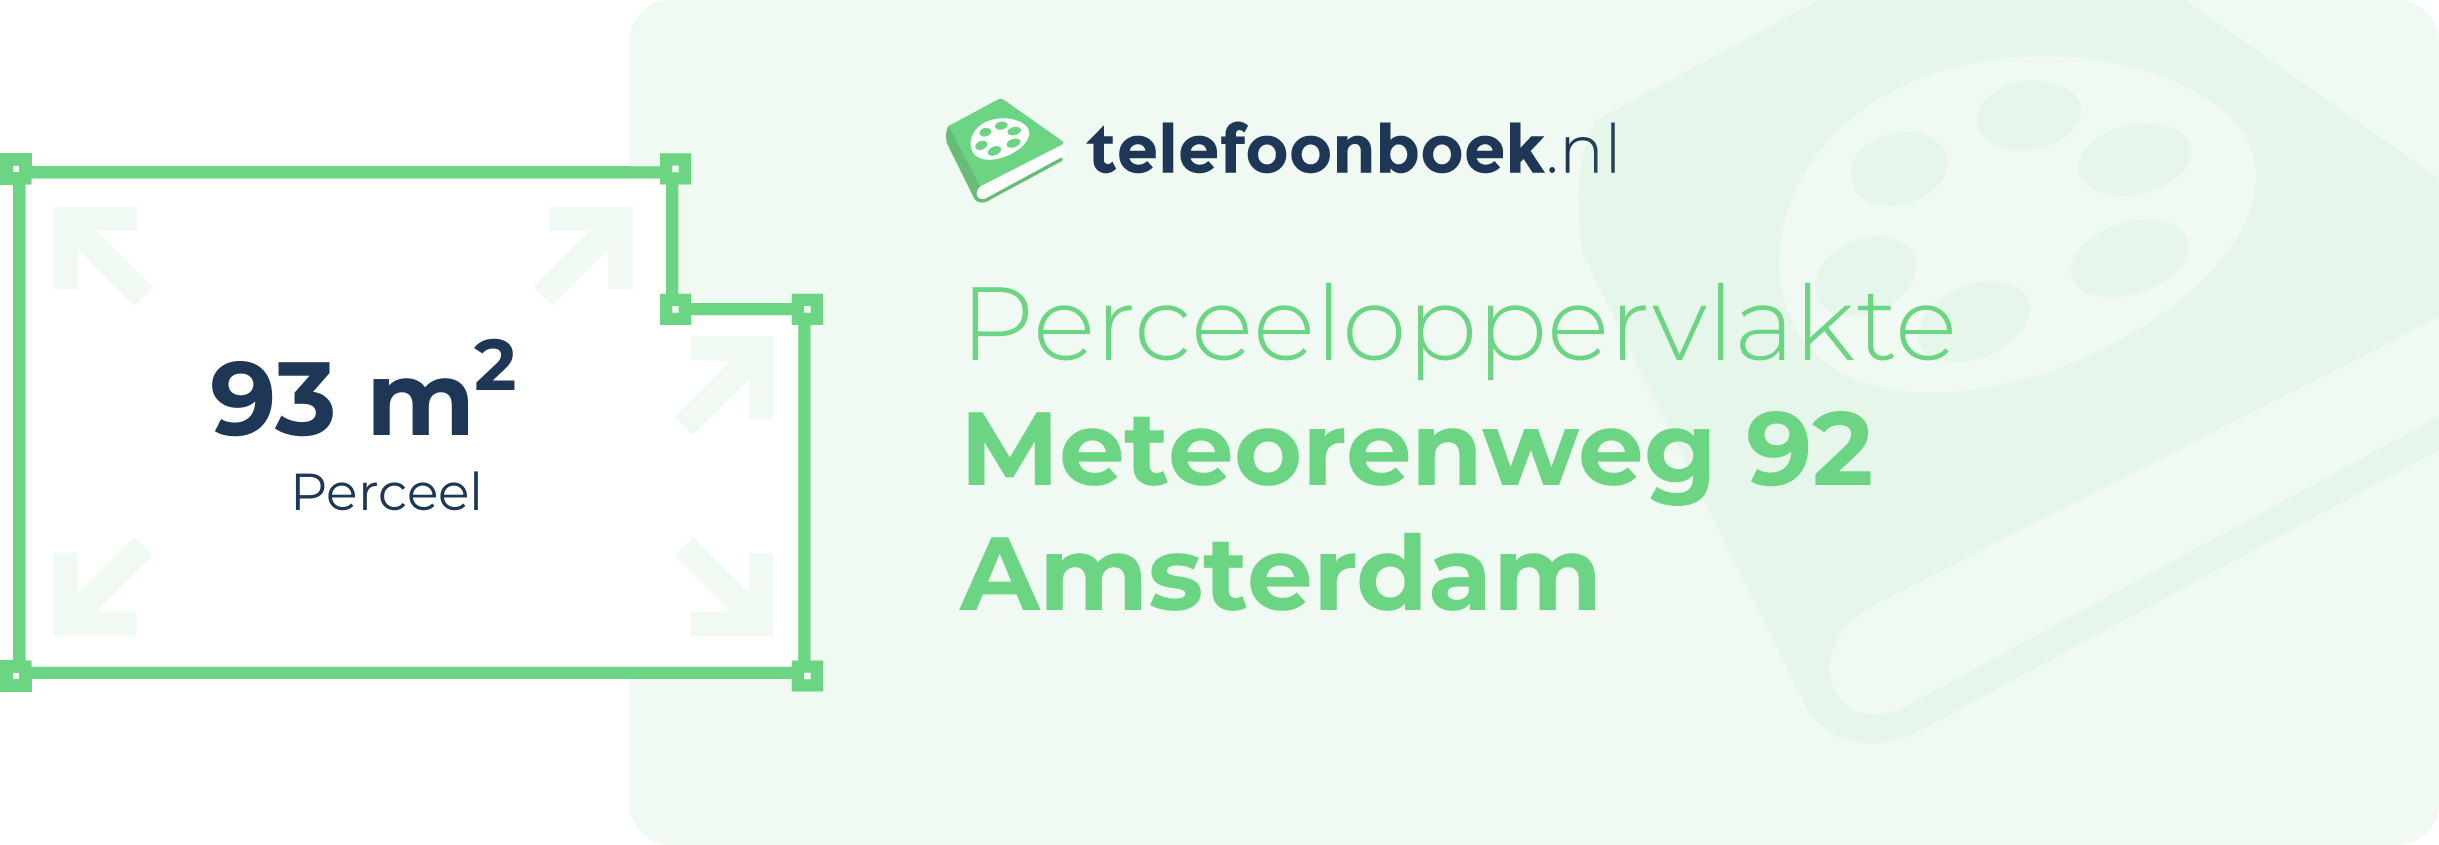 Perceeloppervlakte Meteorenweg 92 Amsterdam